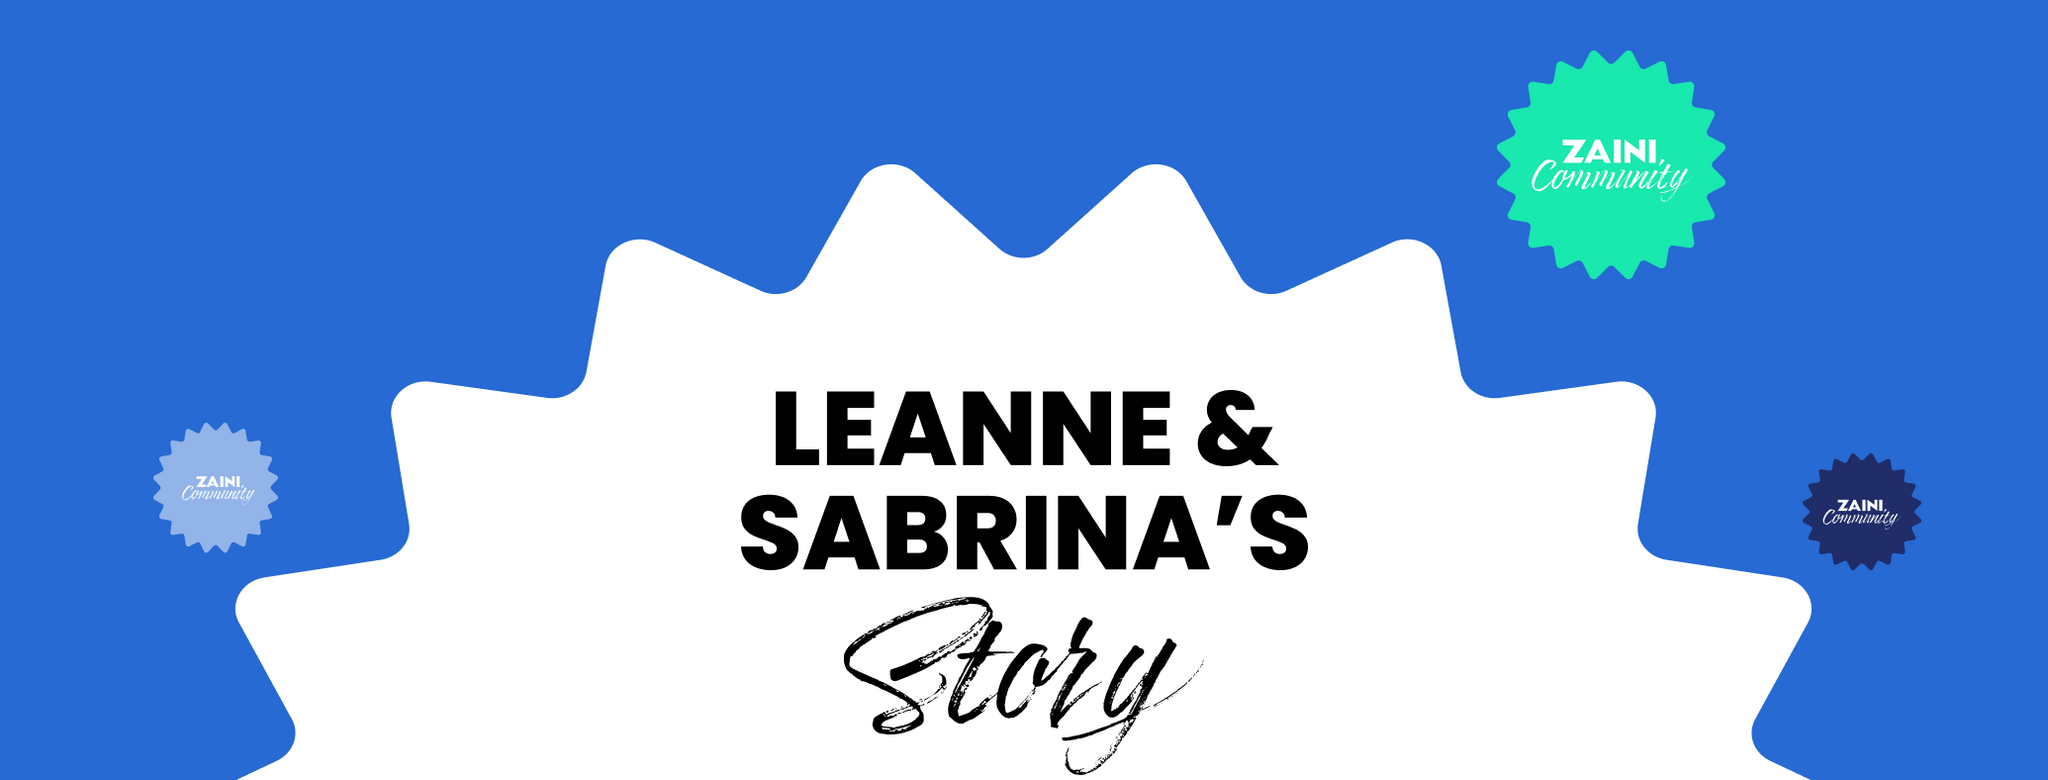 Leanne and Sabrina's story